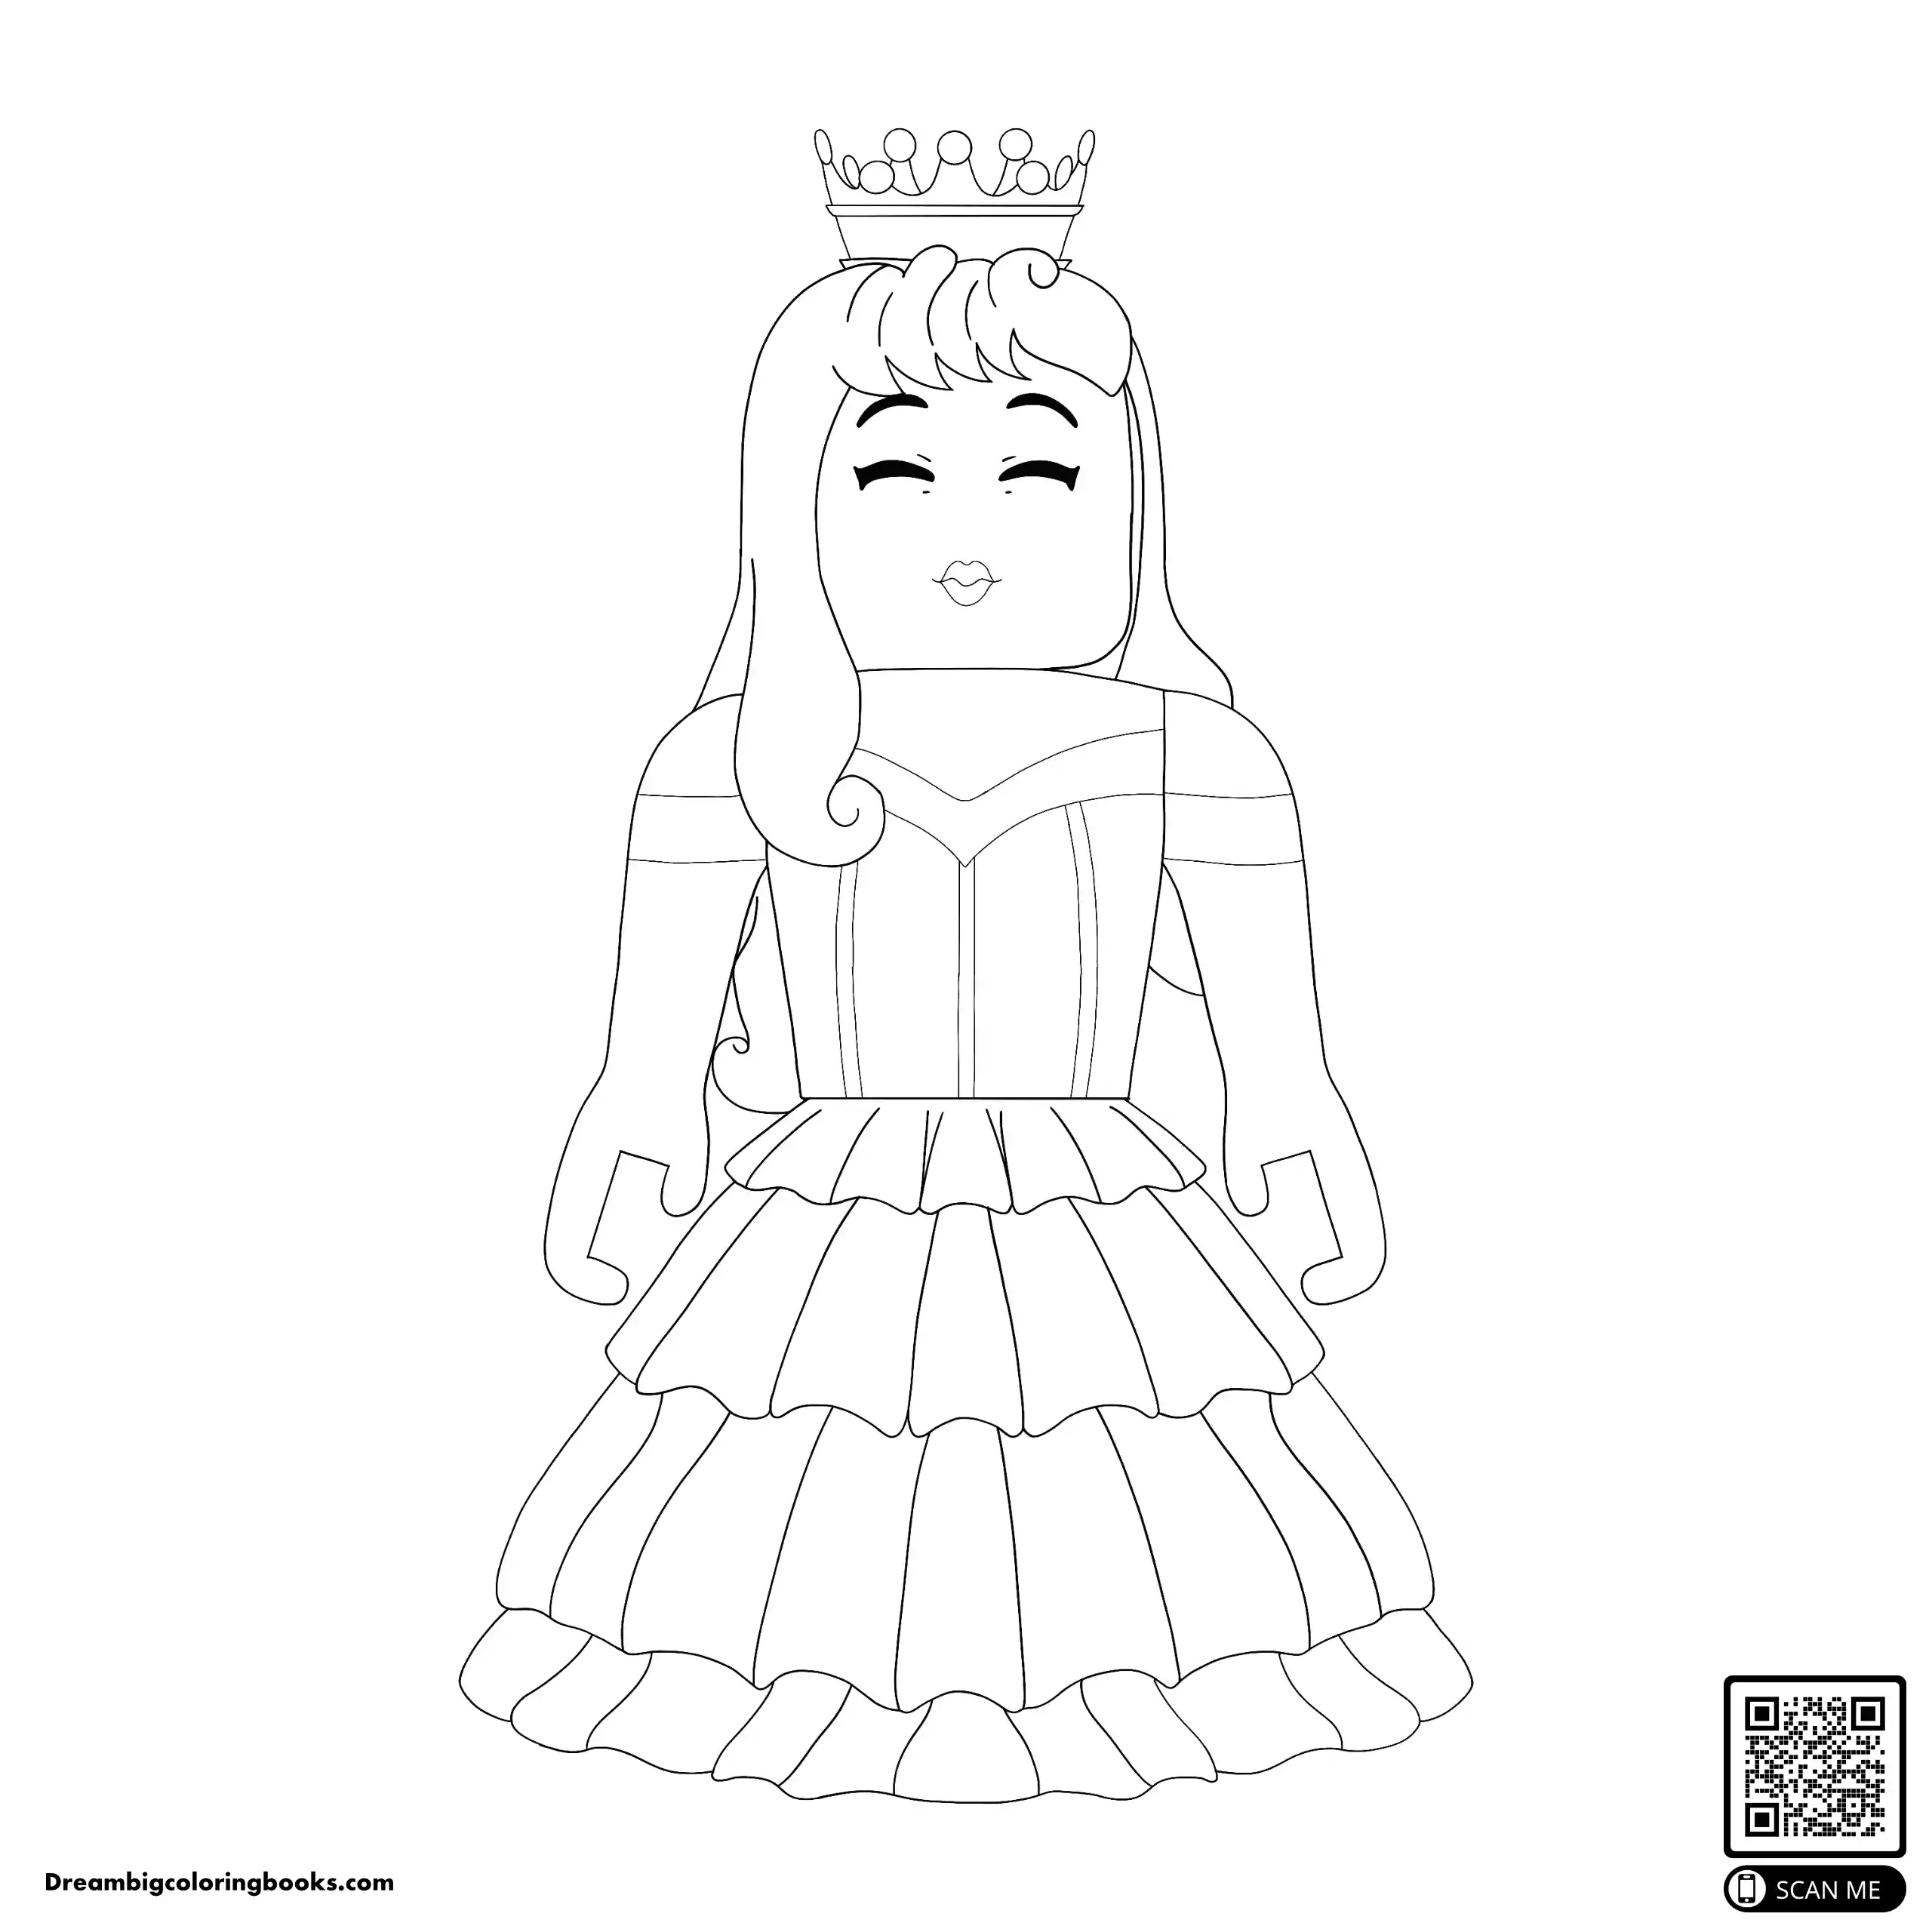 Roblox Princess coloring page